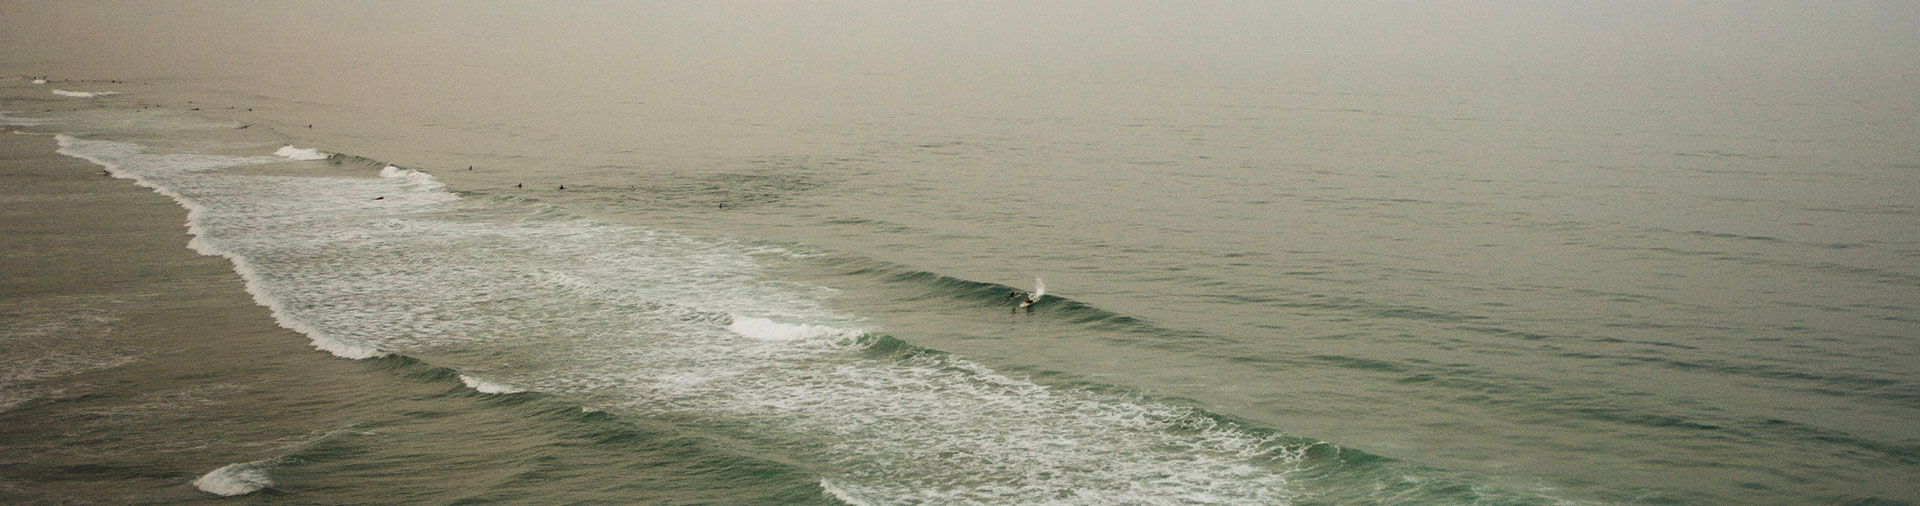 green-vast-ocean-small-surfing-figure